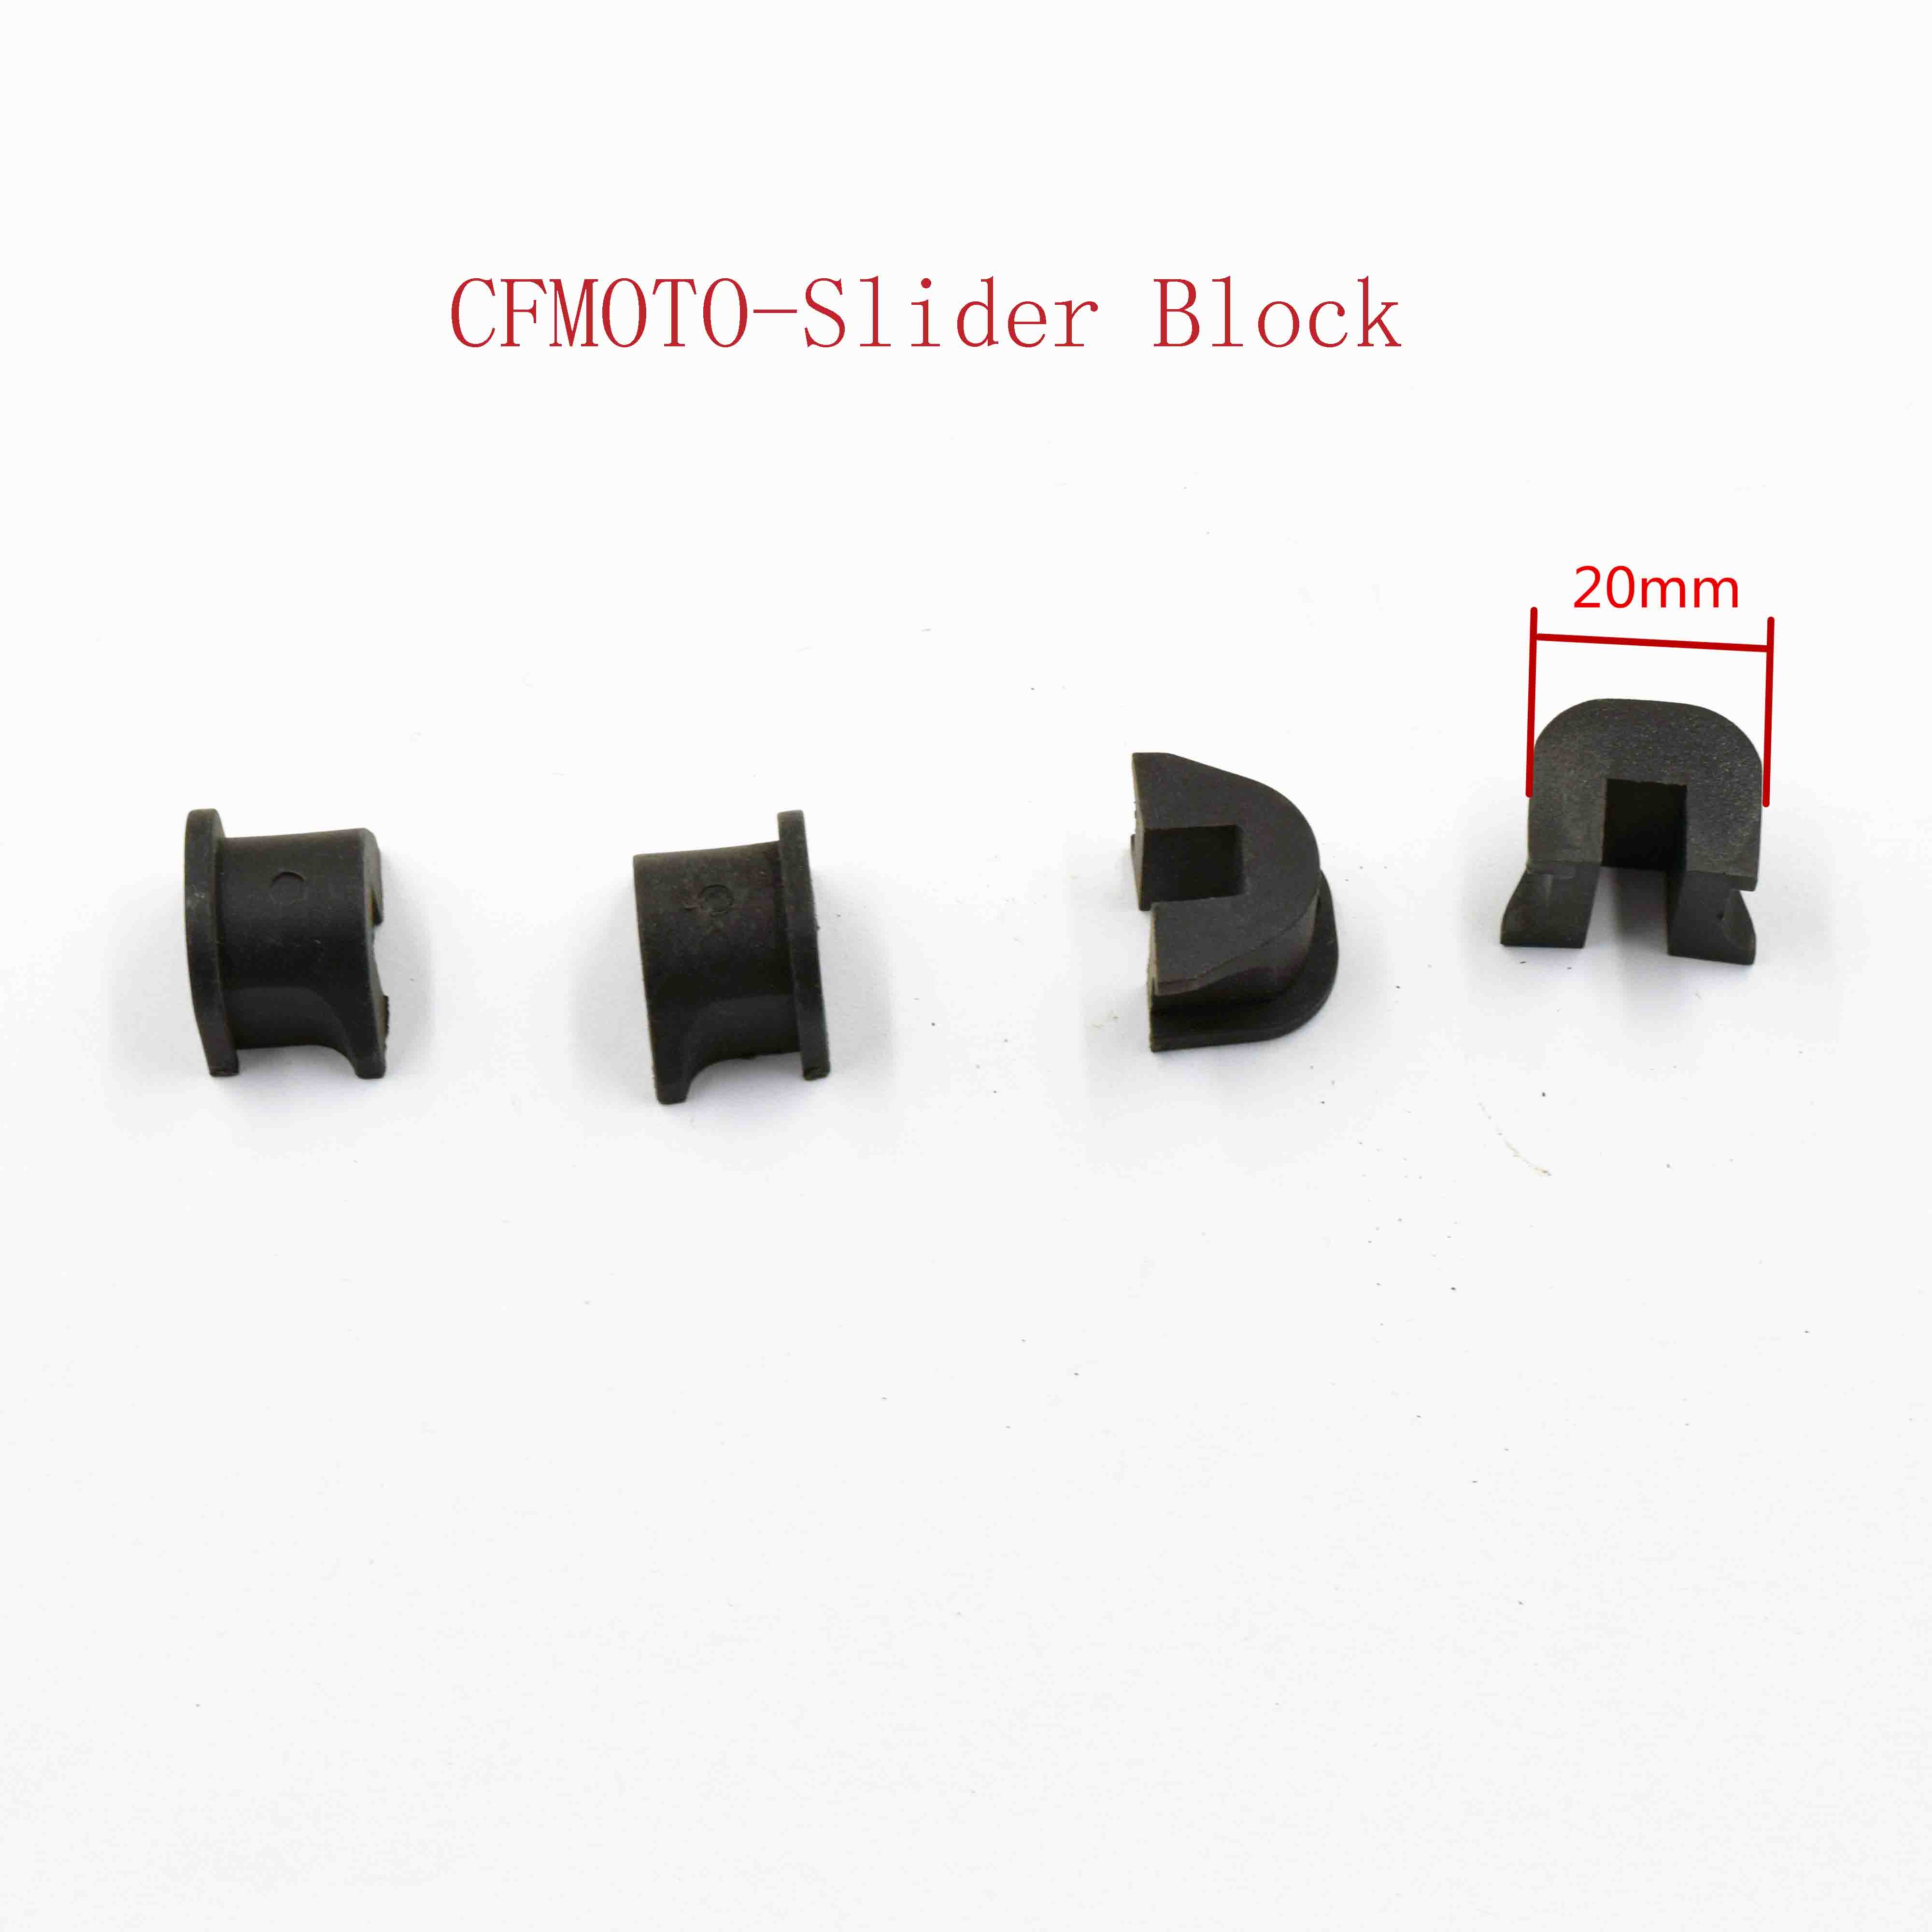 CFMOTO-Slider Block 